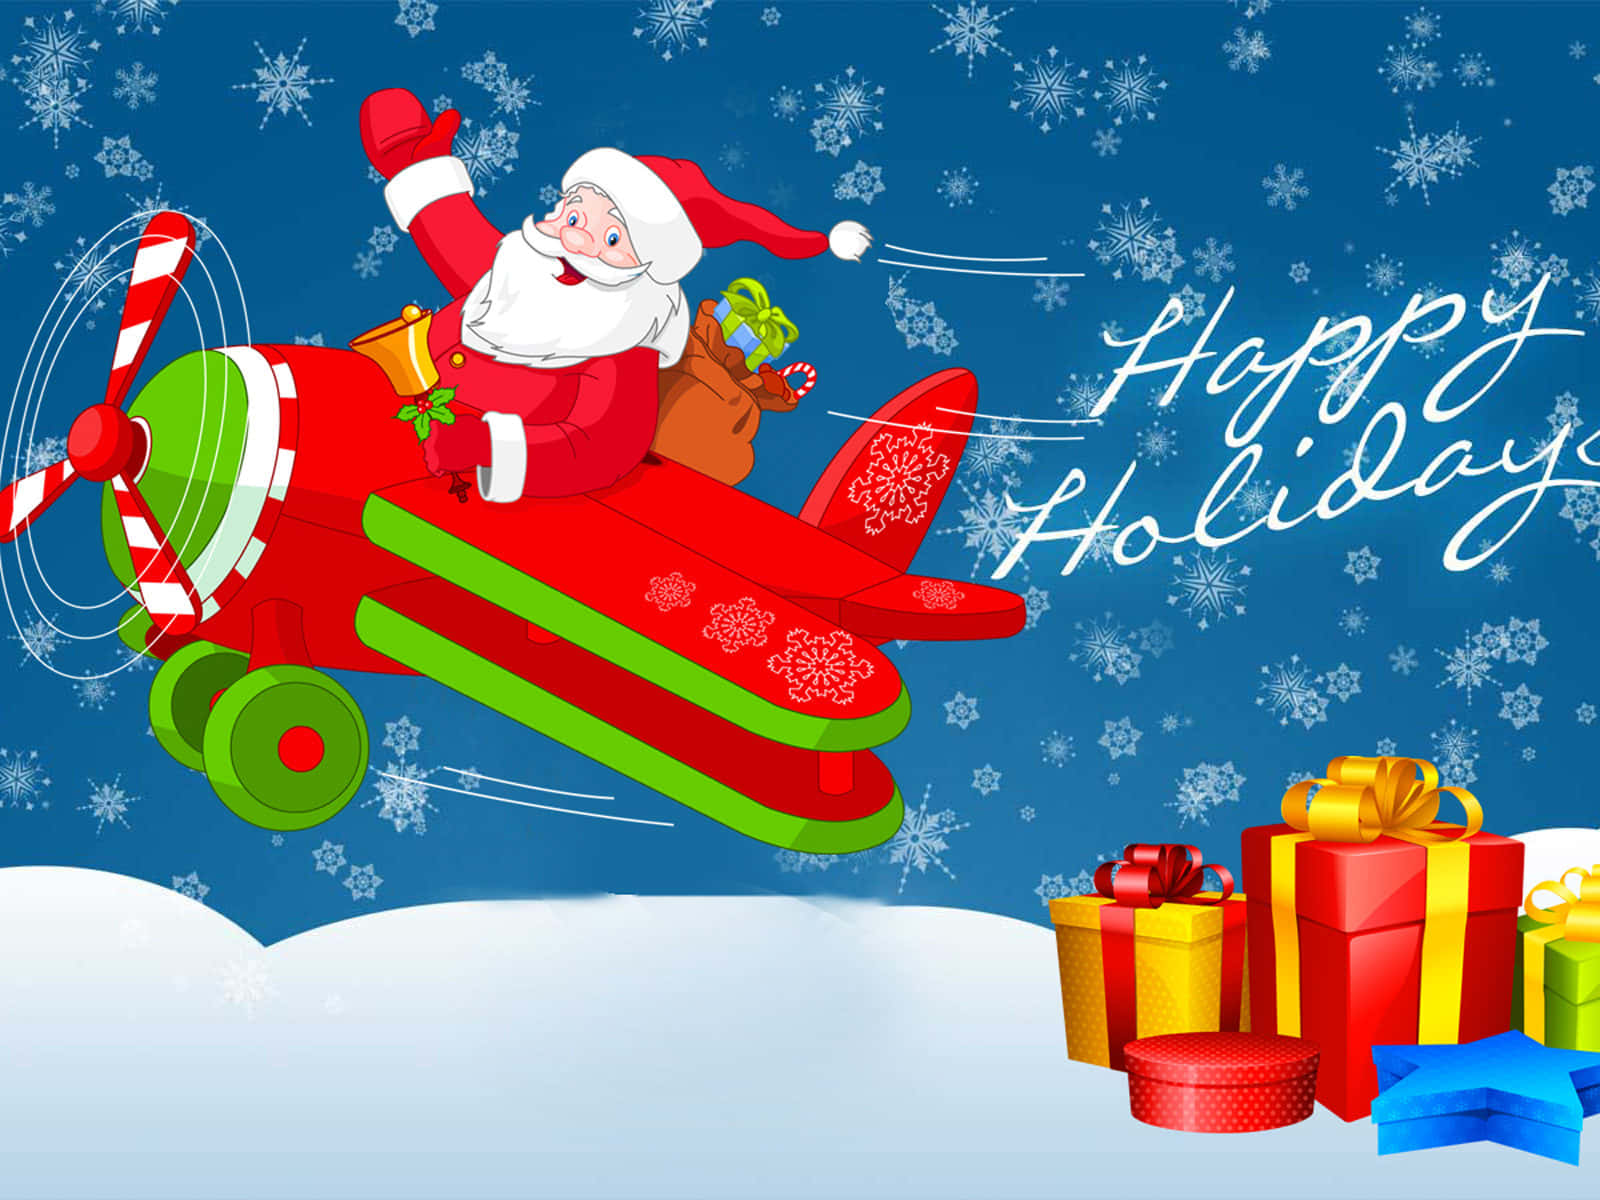 Spread Holiday Cheer with Happy Holidays Desktop Wallpaper Wallpaper